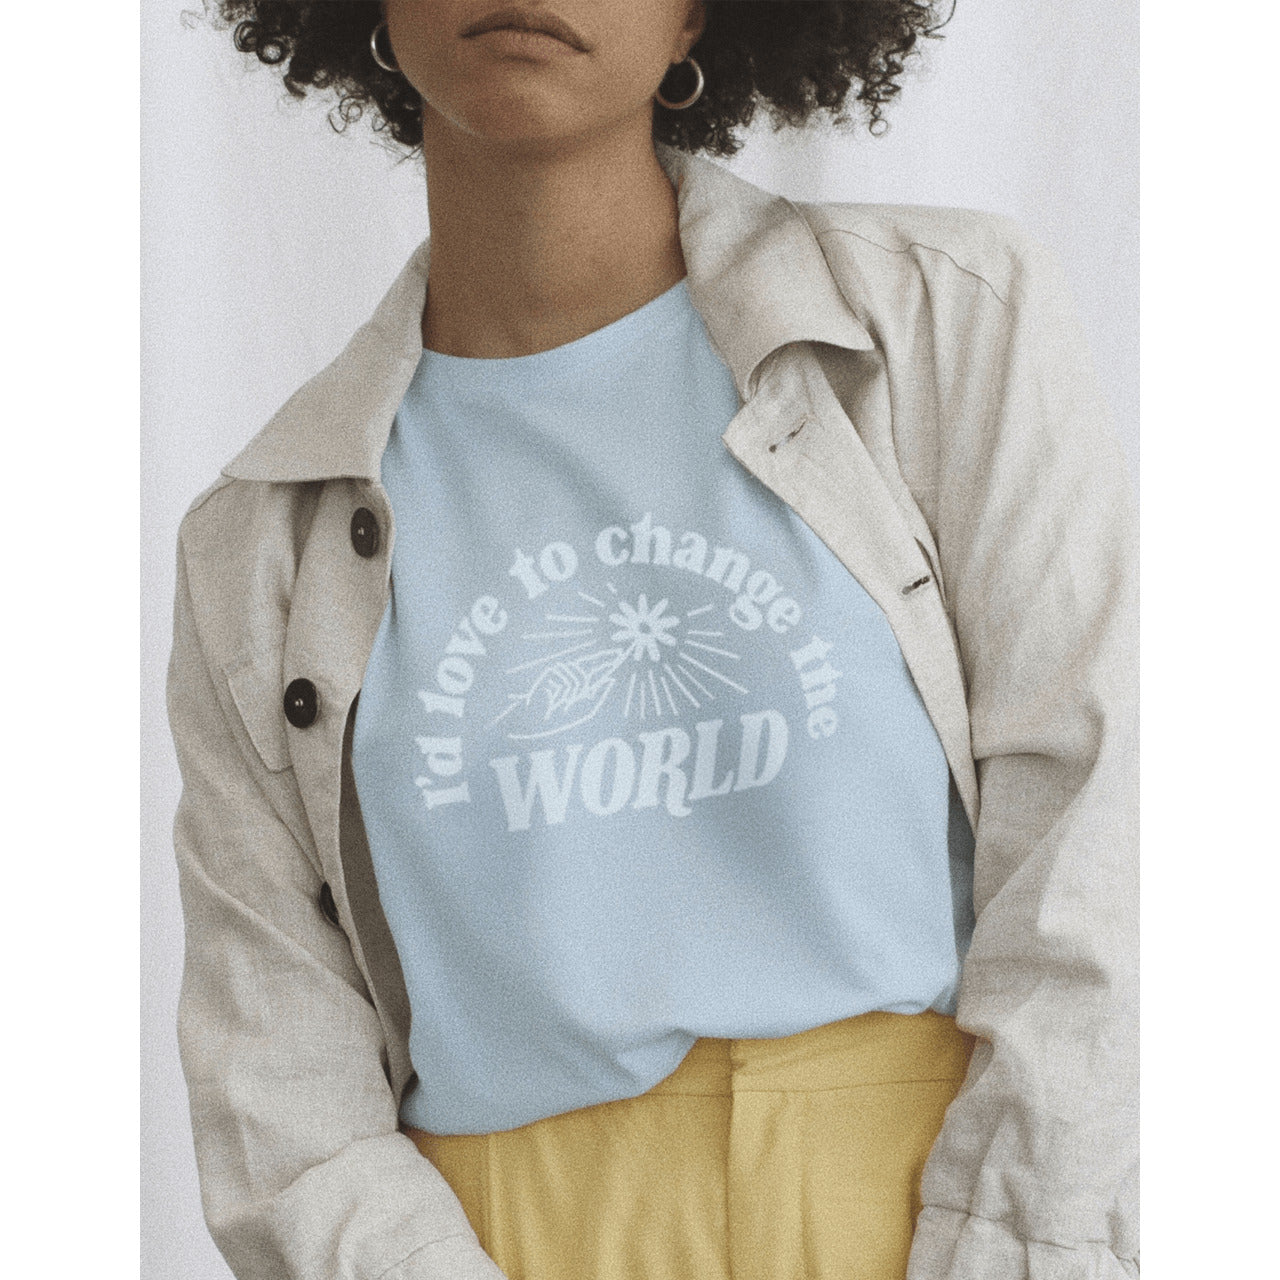 ADIEU CLICHÉ T-Shirt "Change the World"